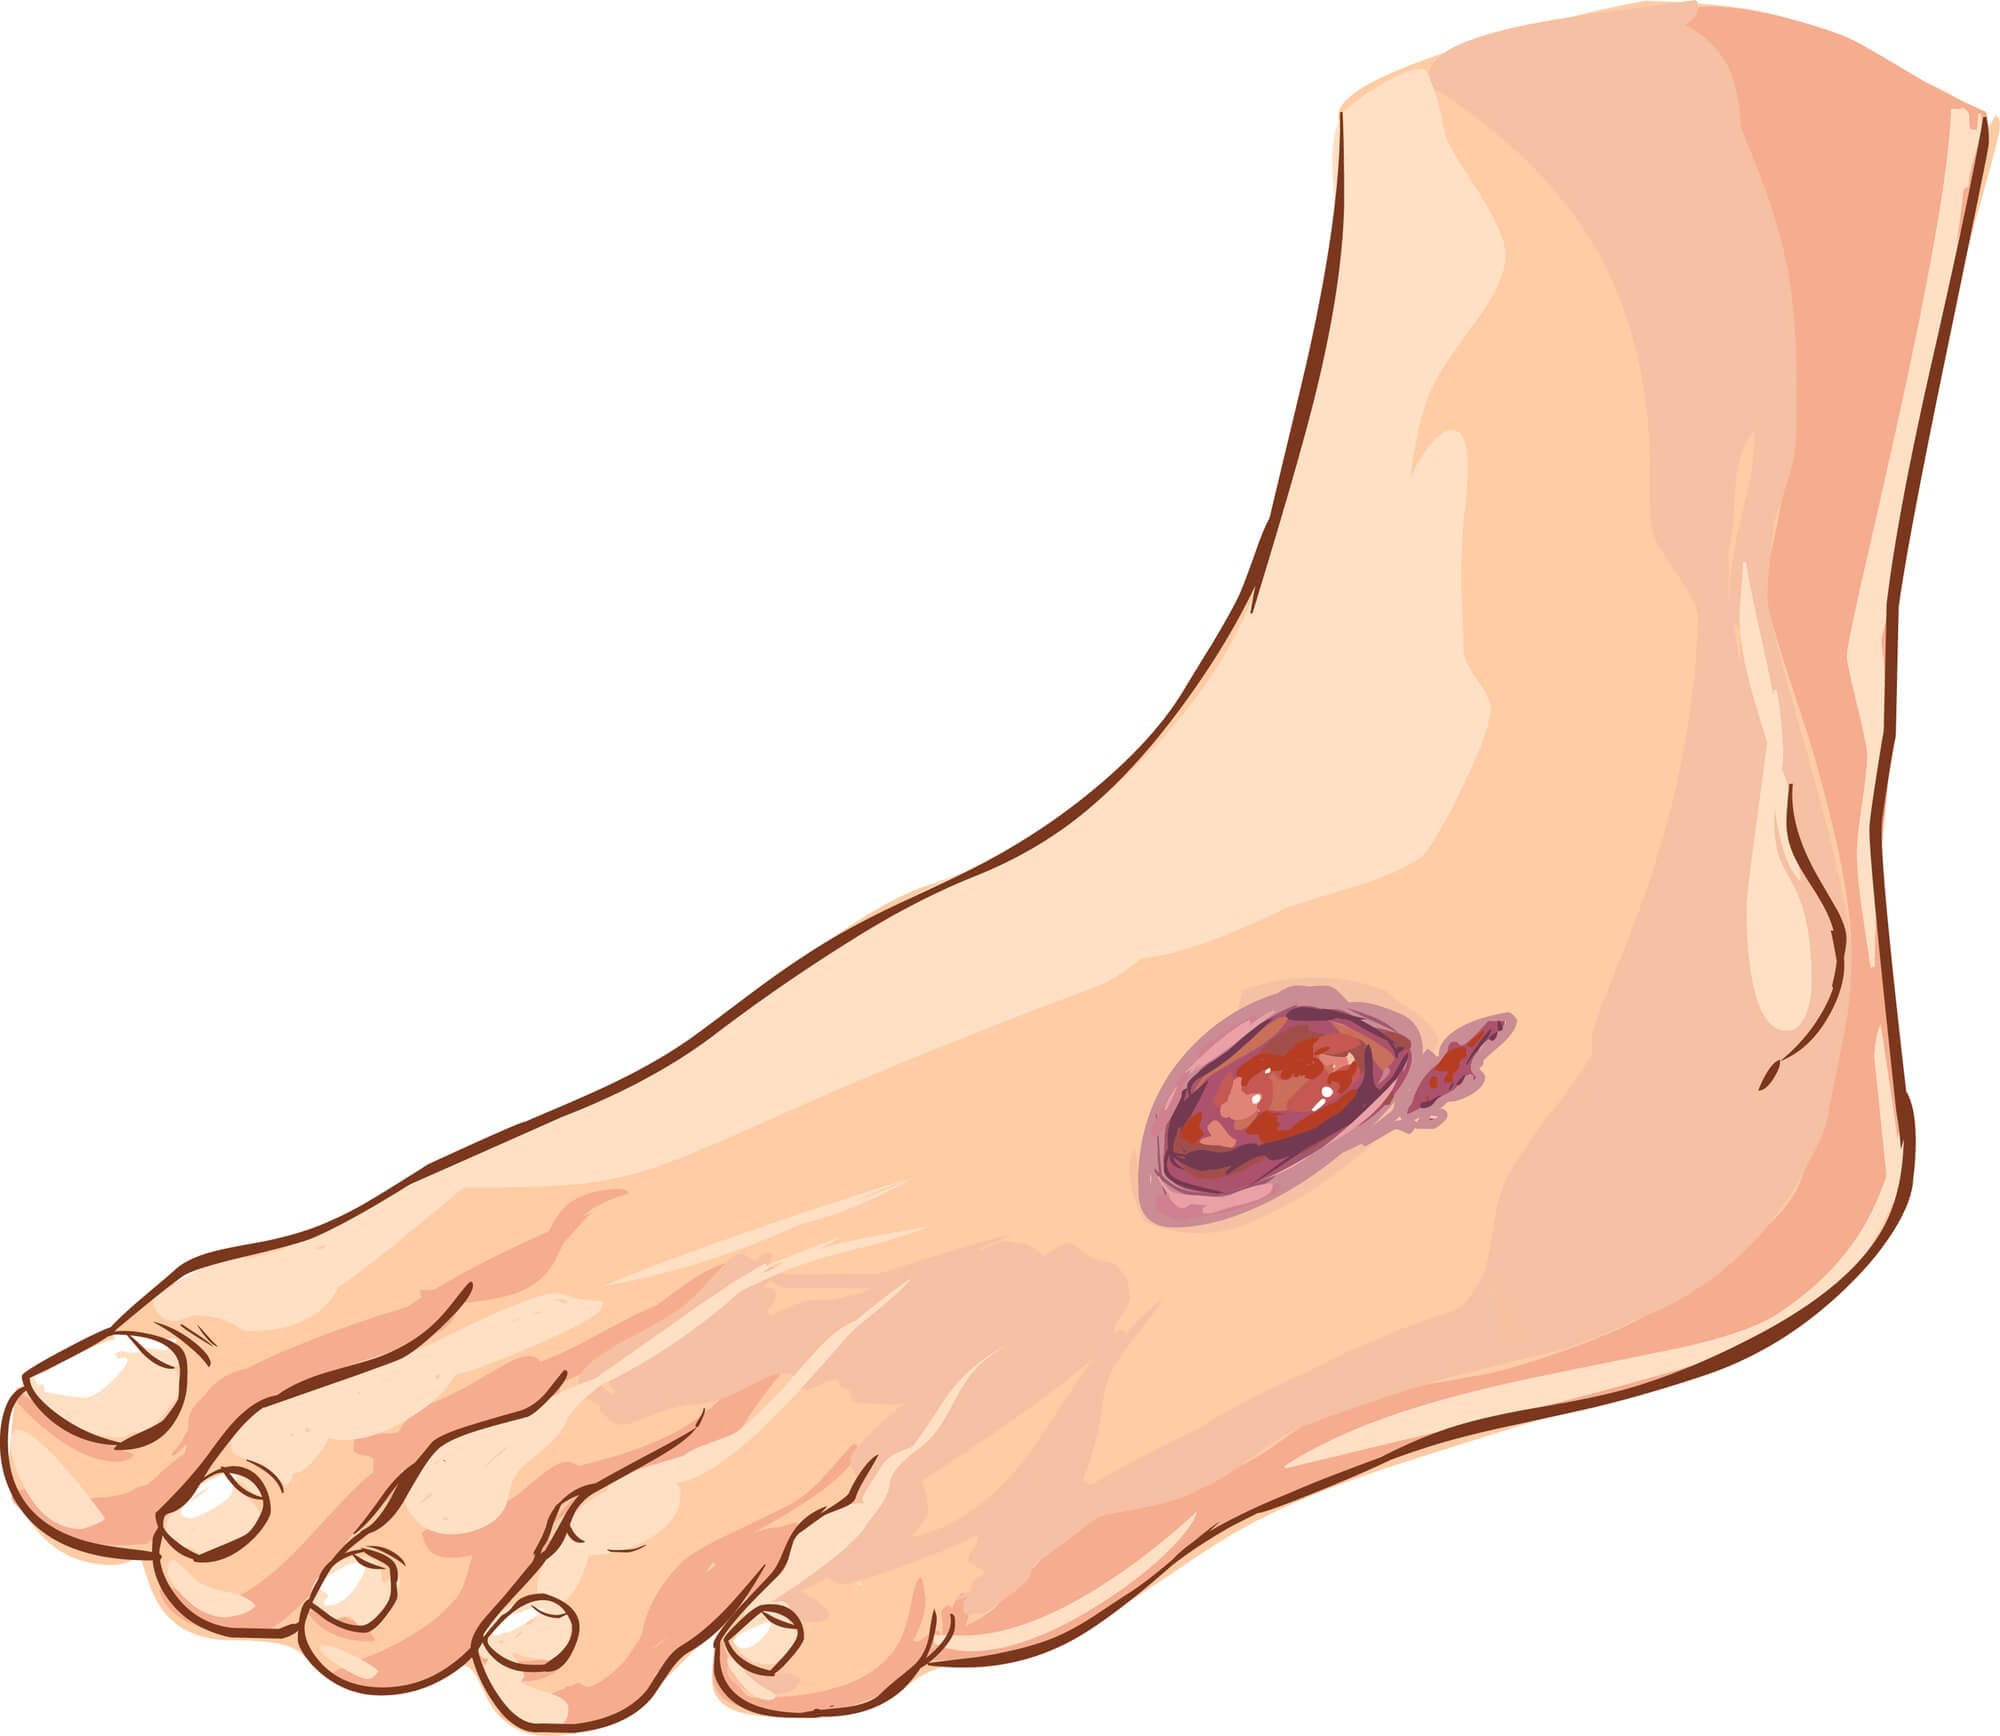 Illustration of Diabetic Foot